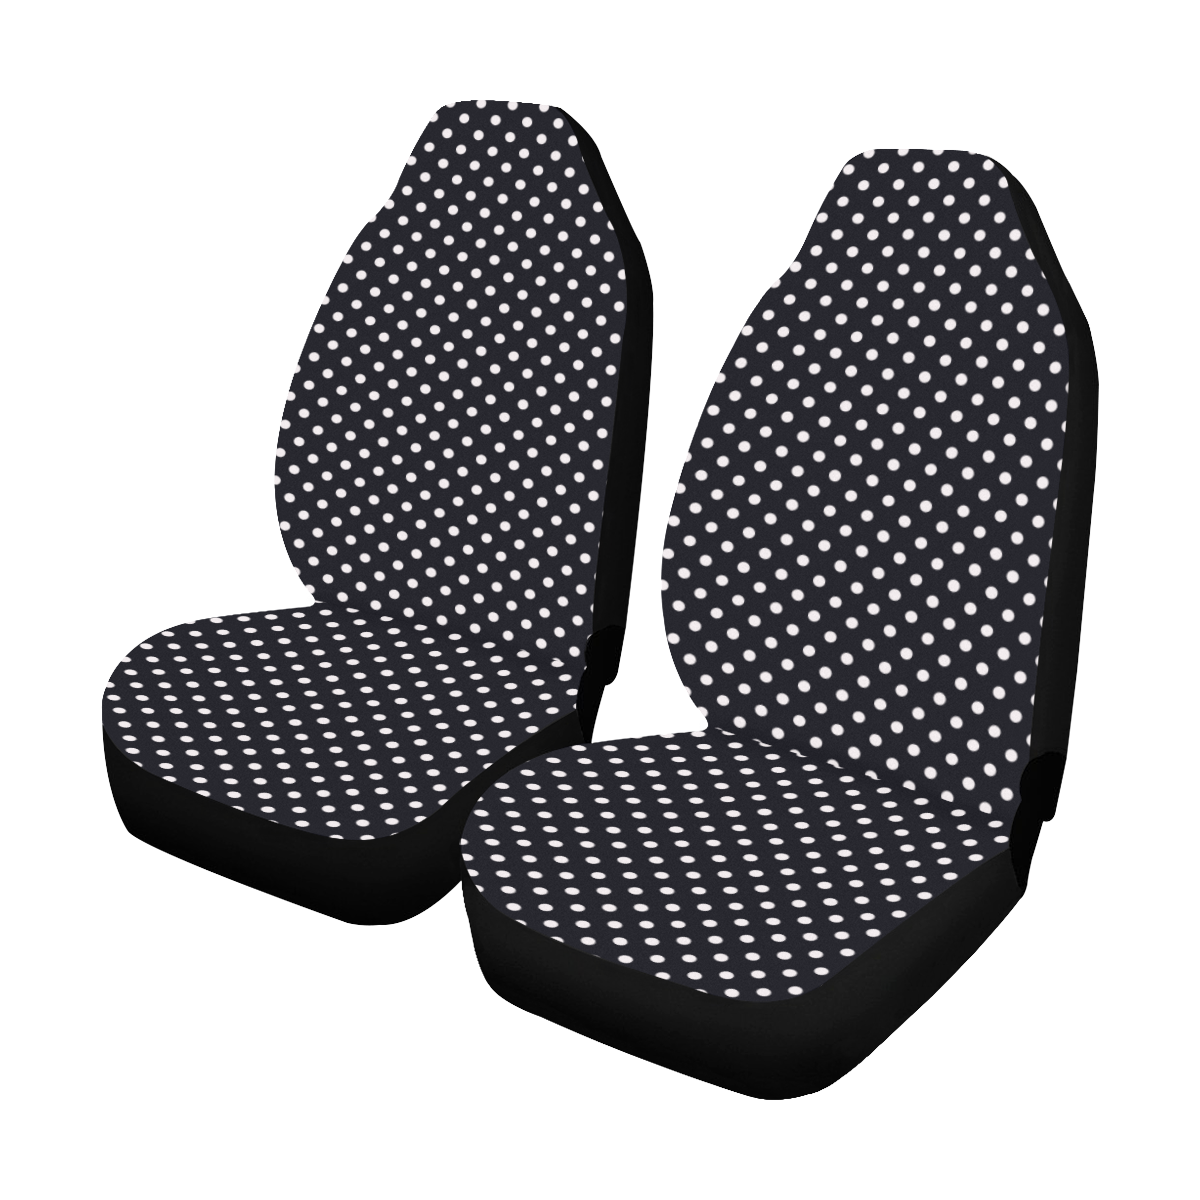 Black polka dots Car Seat Covers (Set of 2)